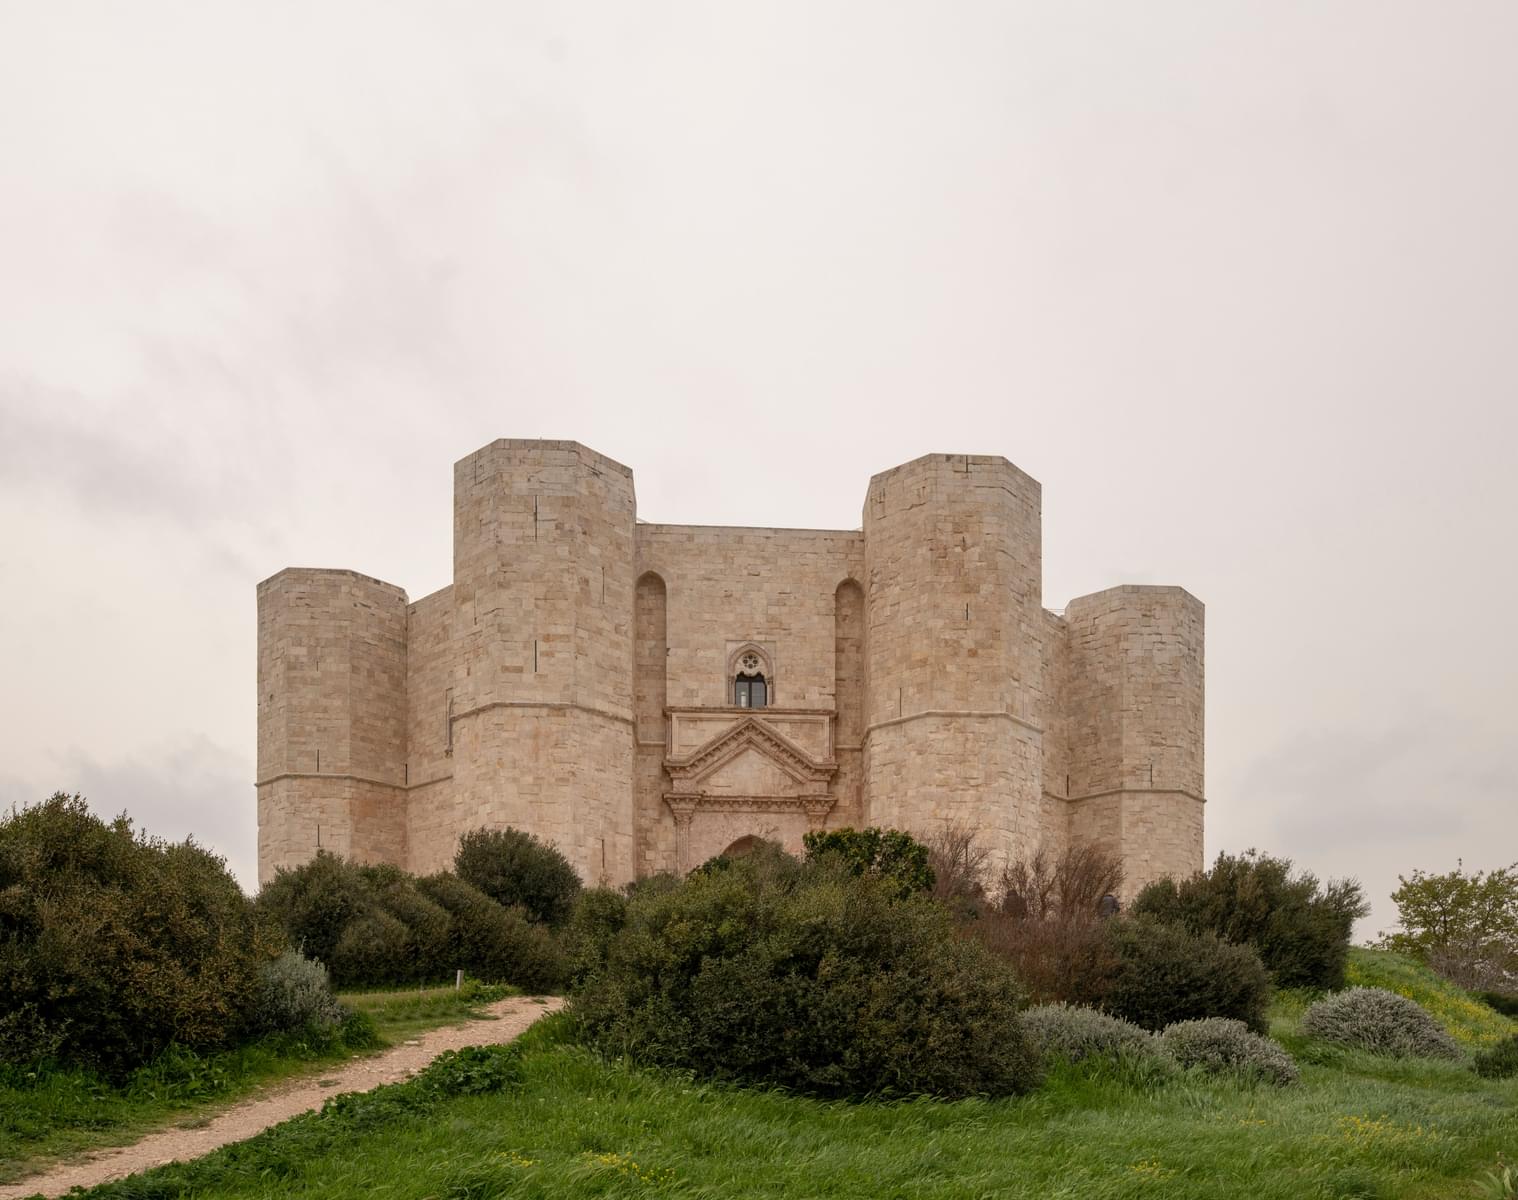  The Exterior of the Castel del Monte